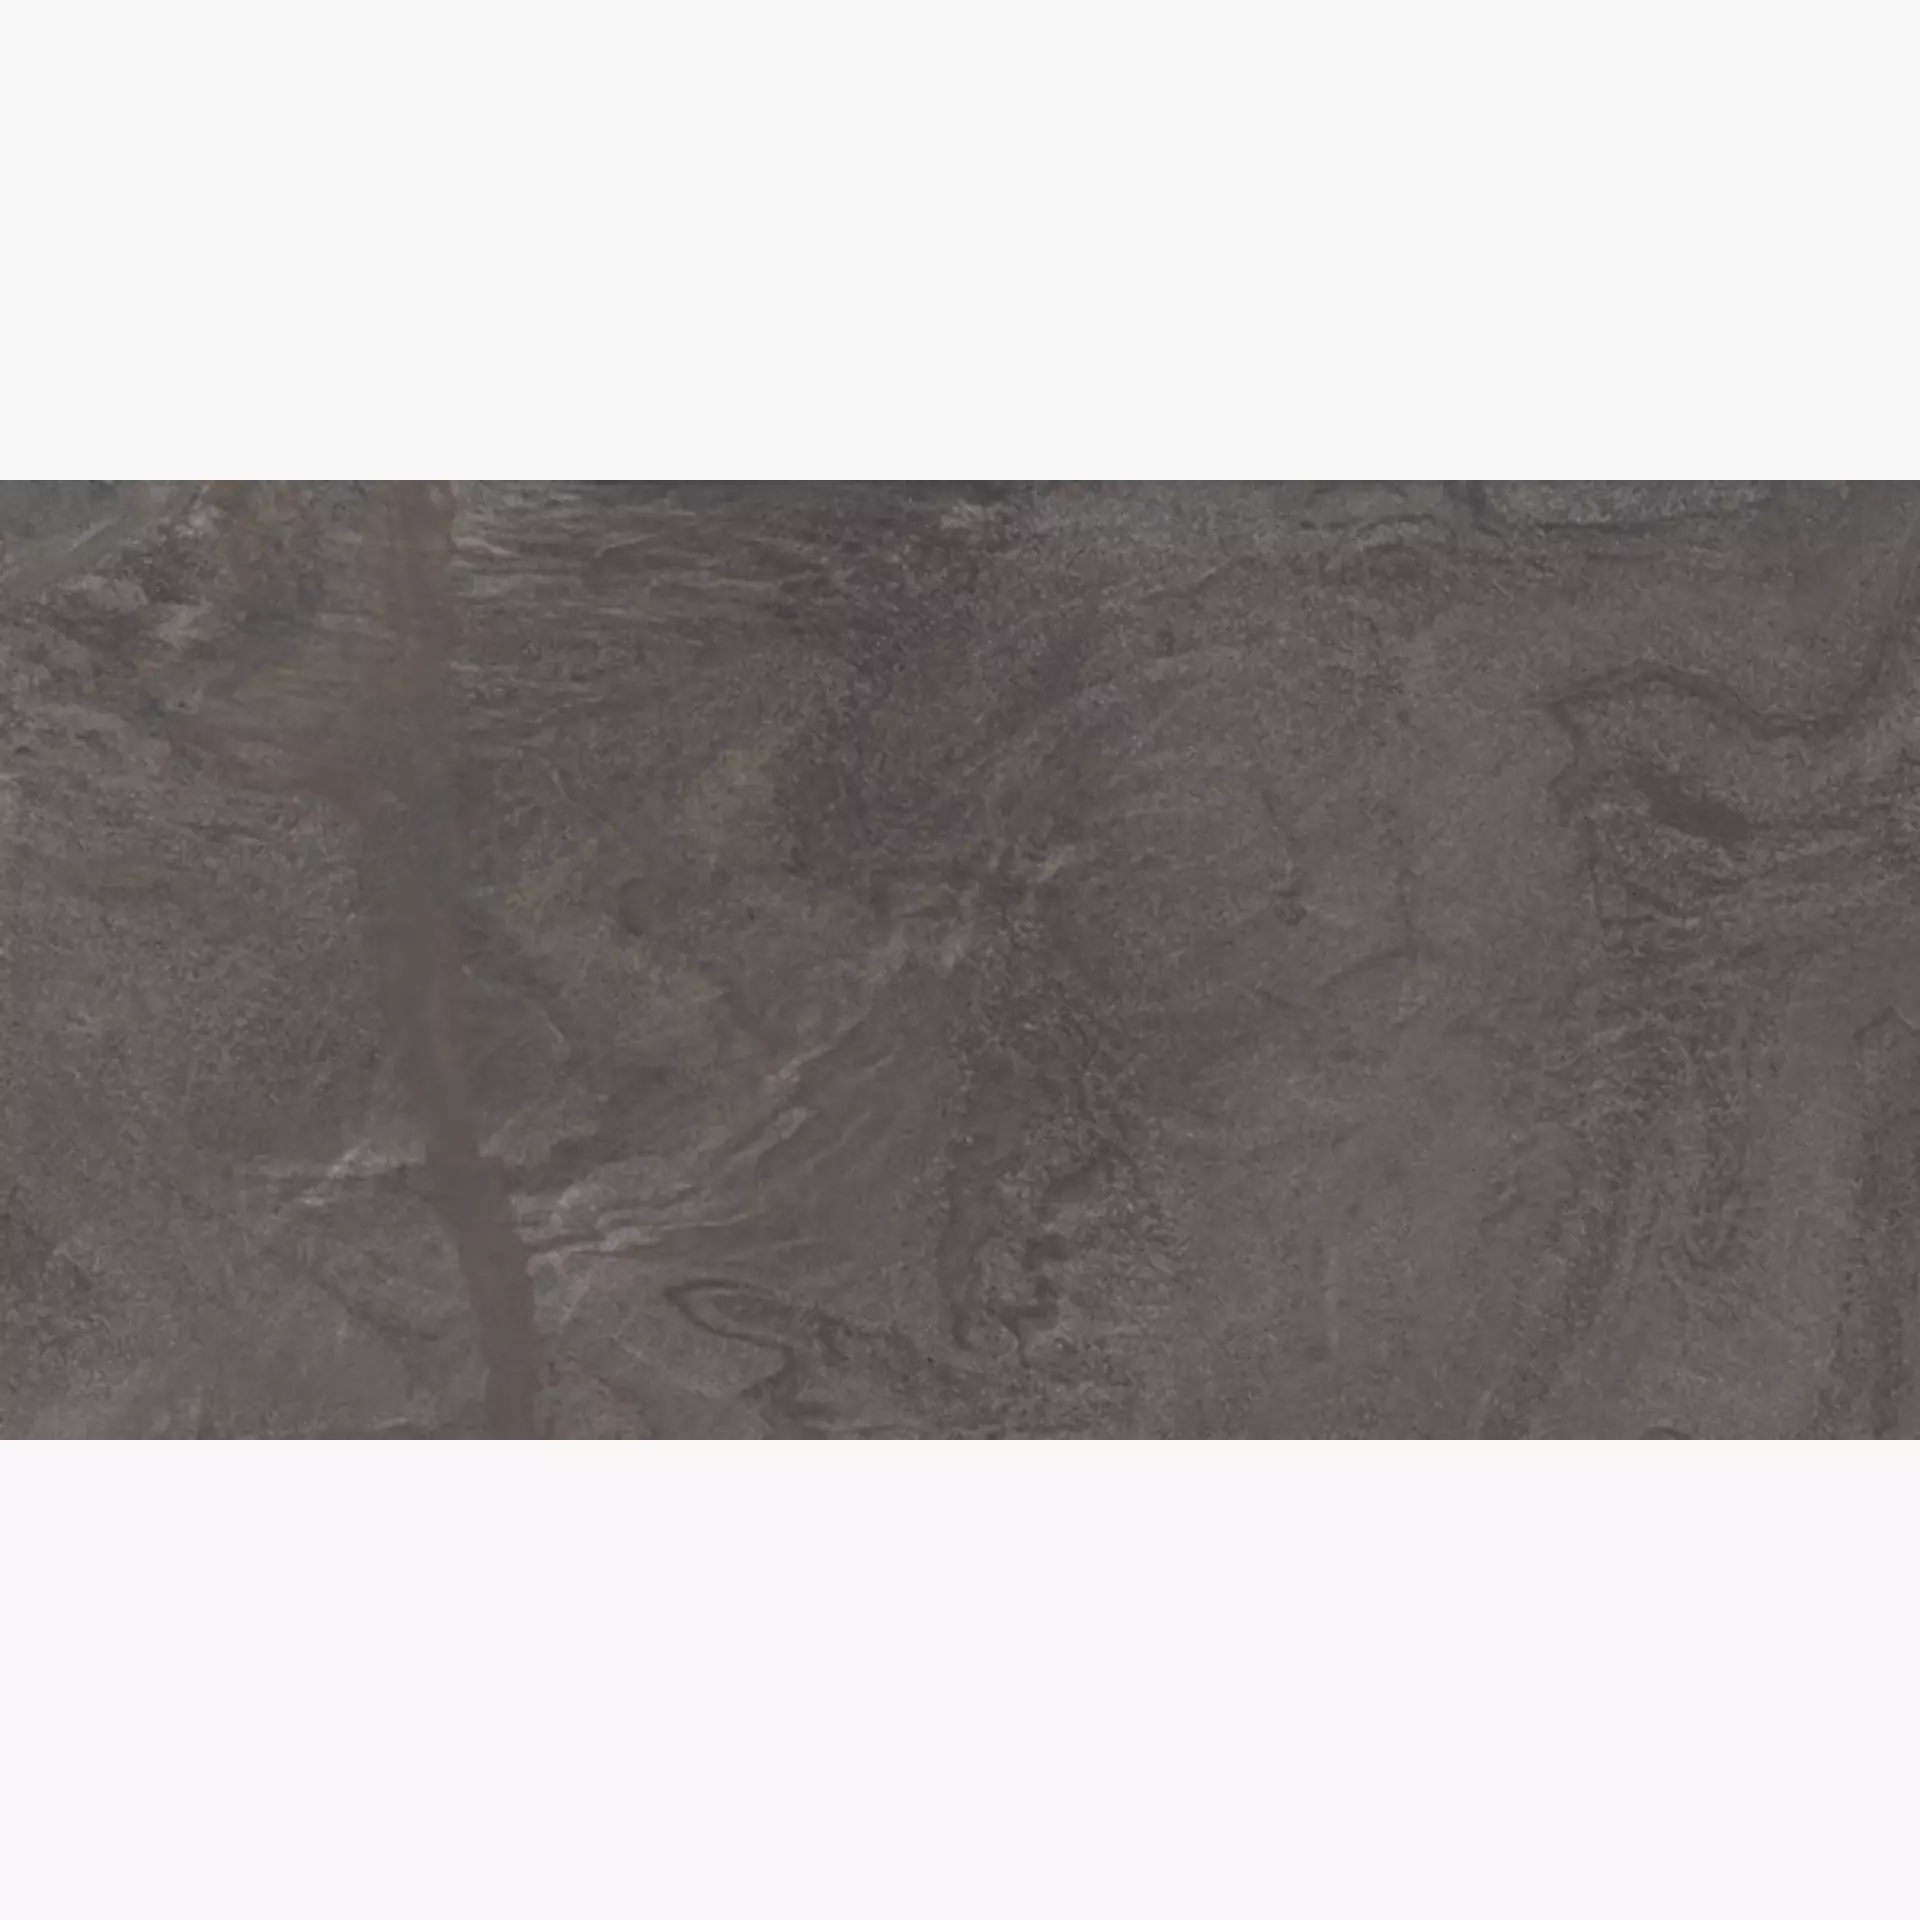 Diesel Liquid Stone Bronze Naturale – Matt 863735 30x60cm rectified 9mm